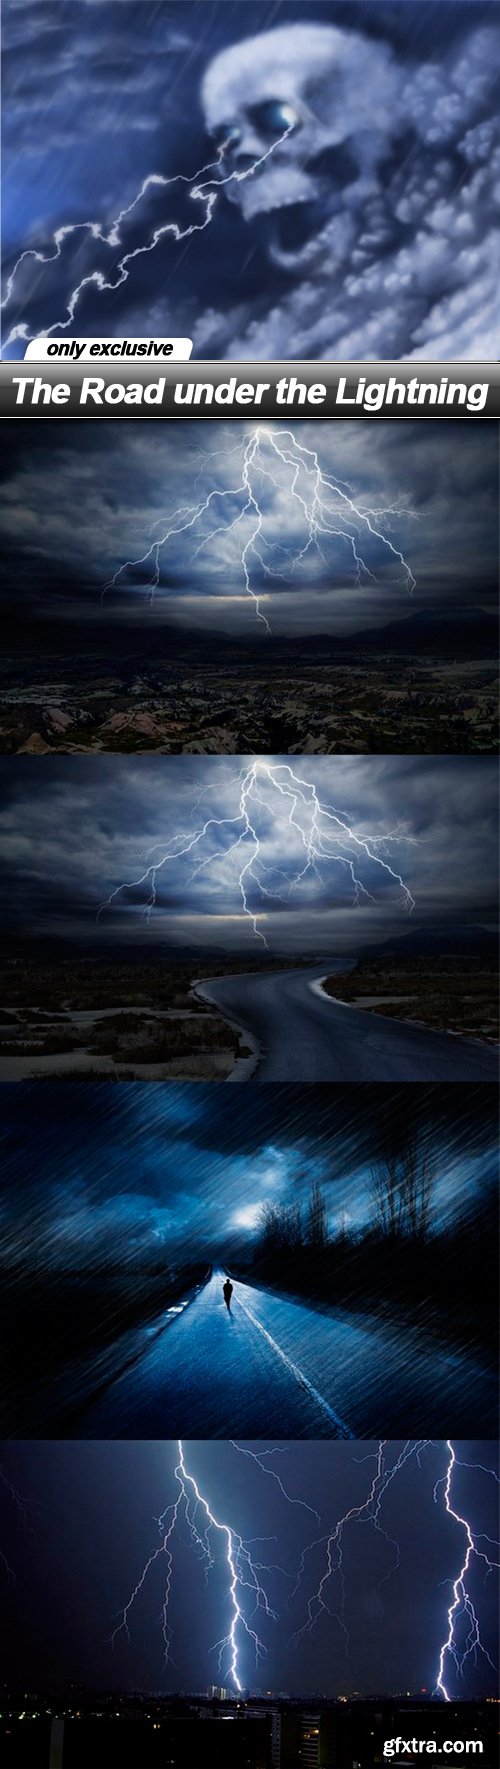 The Road under the Lightning - 5 UHQ JPEG